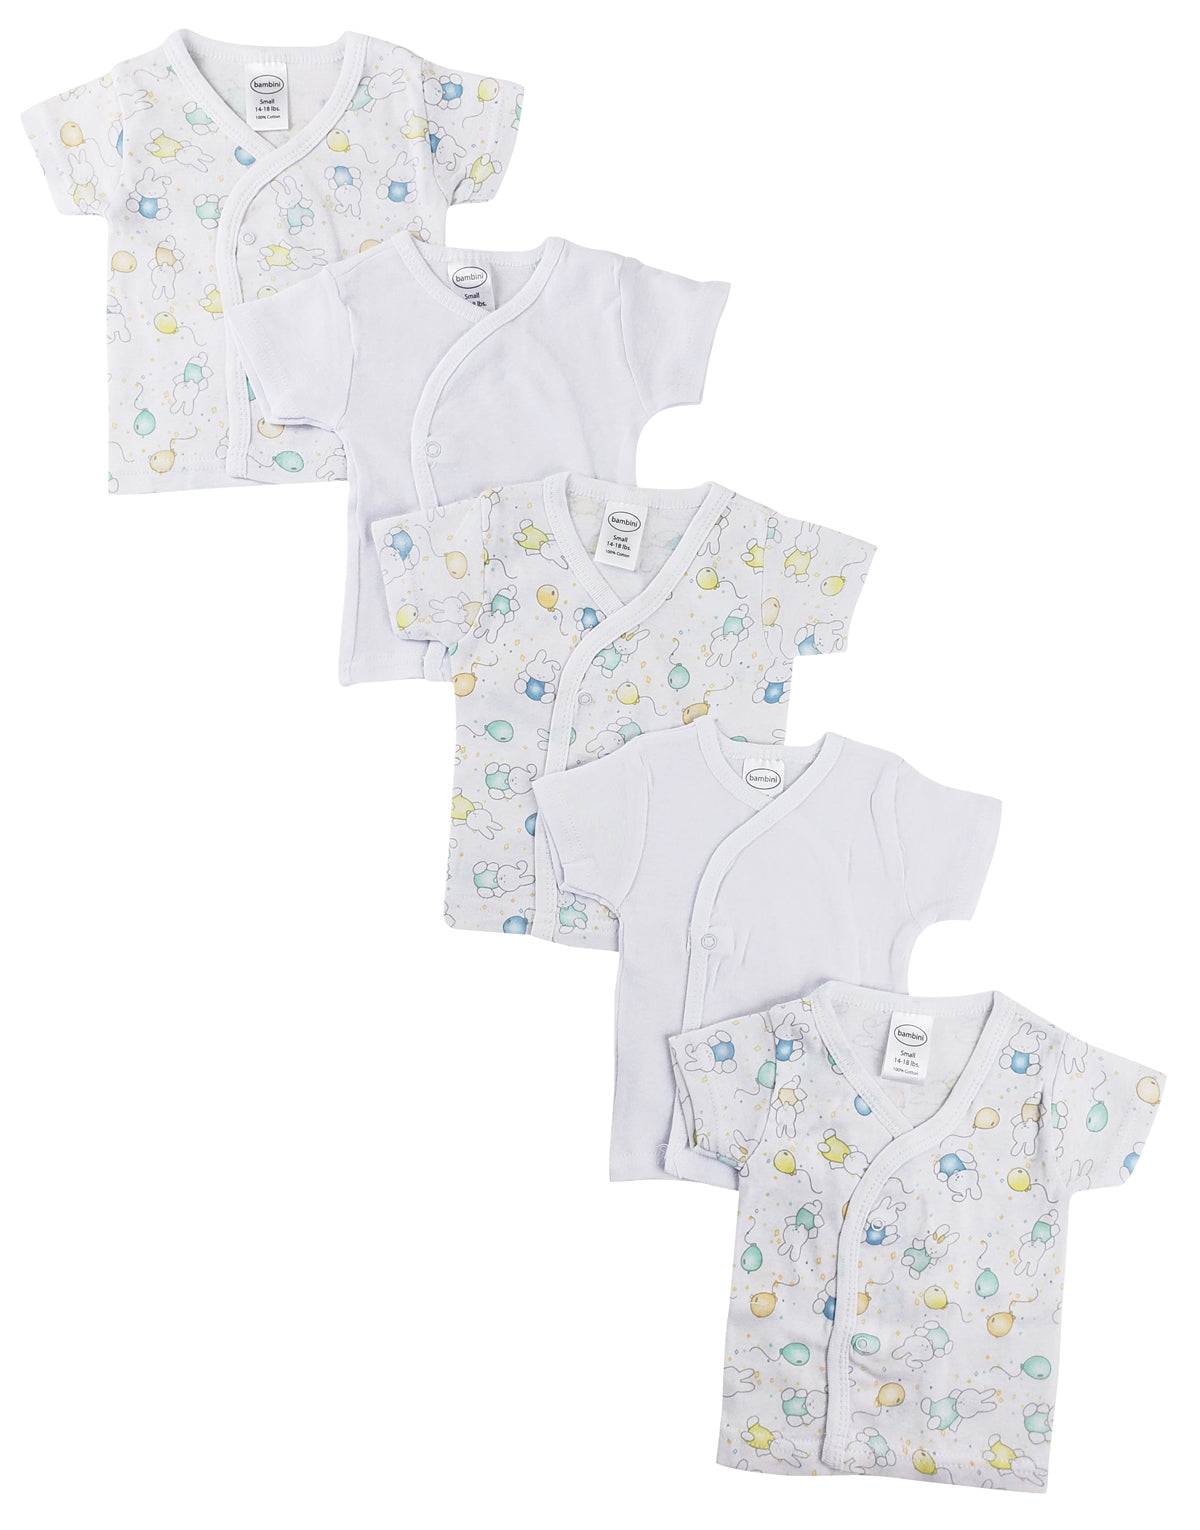 Infant Side Snap Short Sleeve Shirt - 5 Pack NC_0203